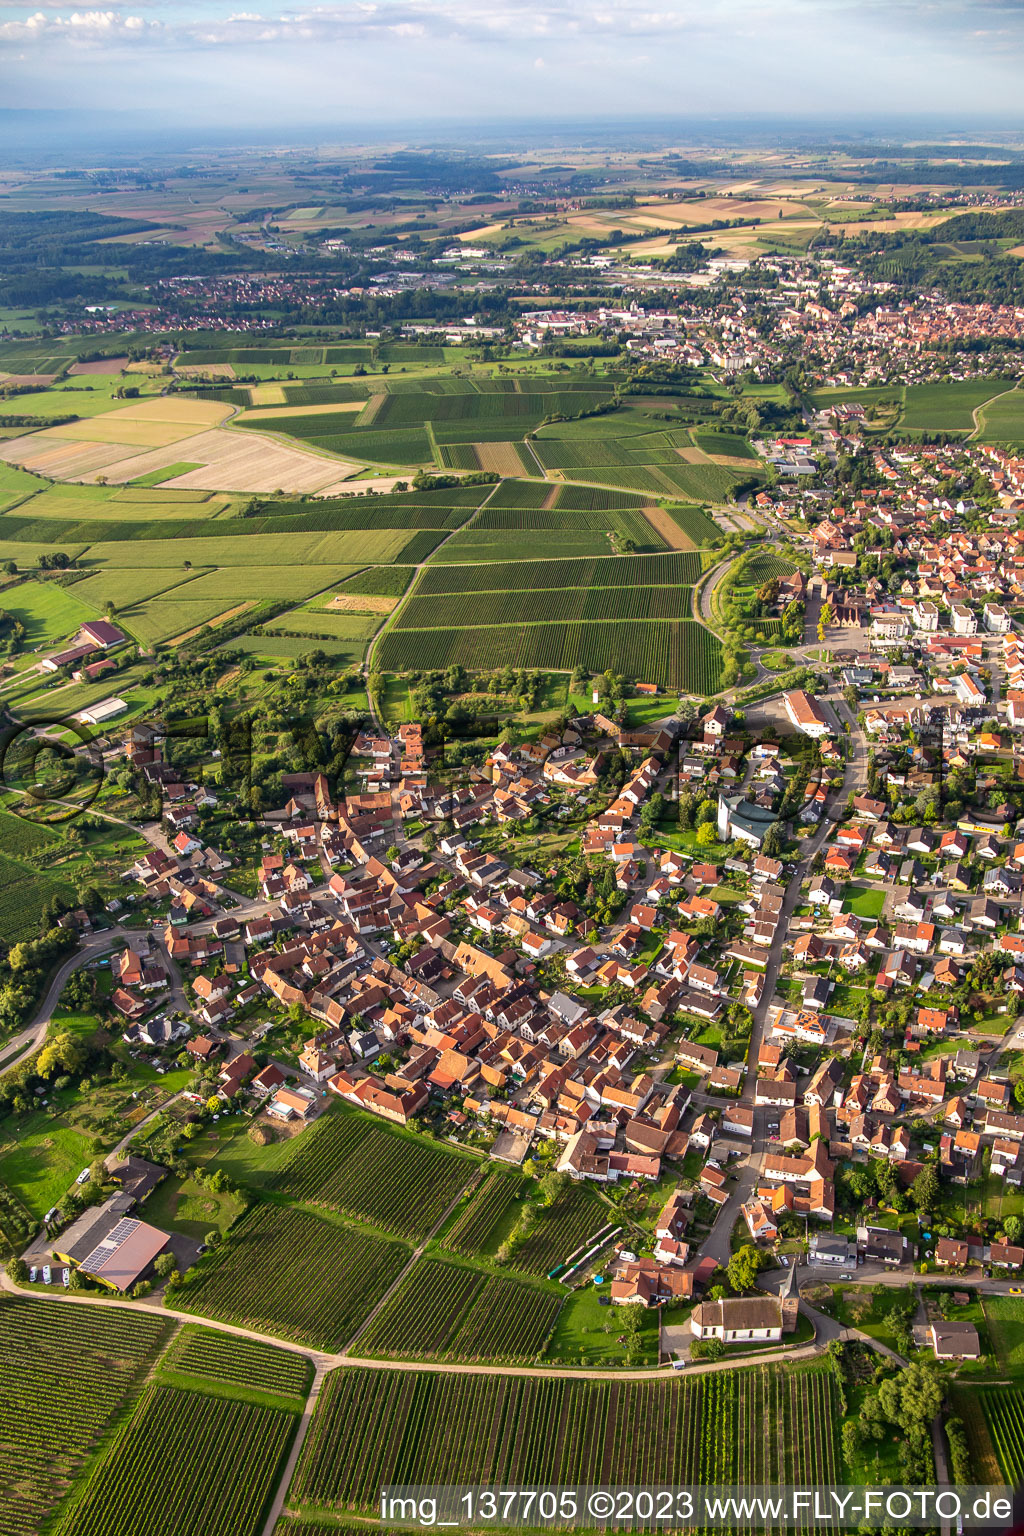 From the north in the district Rechtenbach in Schweigen-Rechtenbach in the state Rhineland-Palatinate, Germany